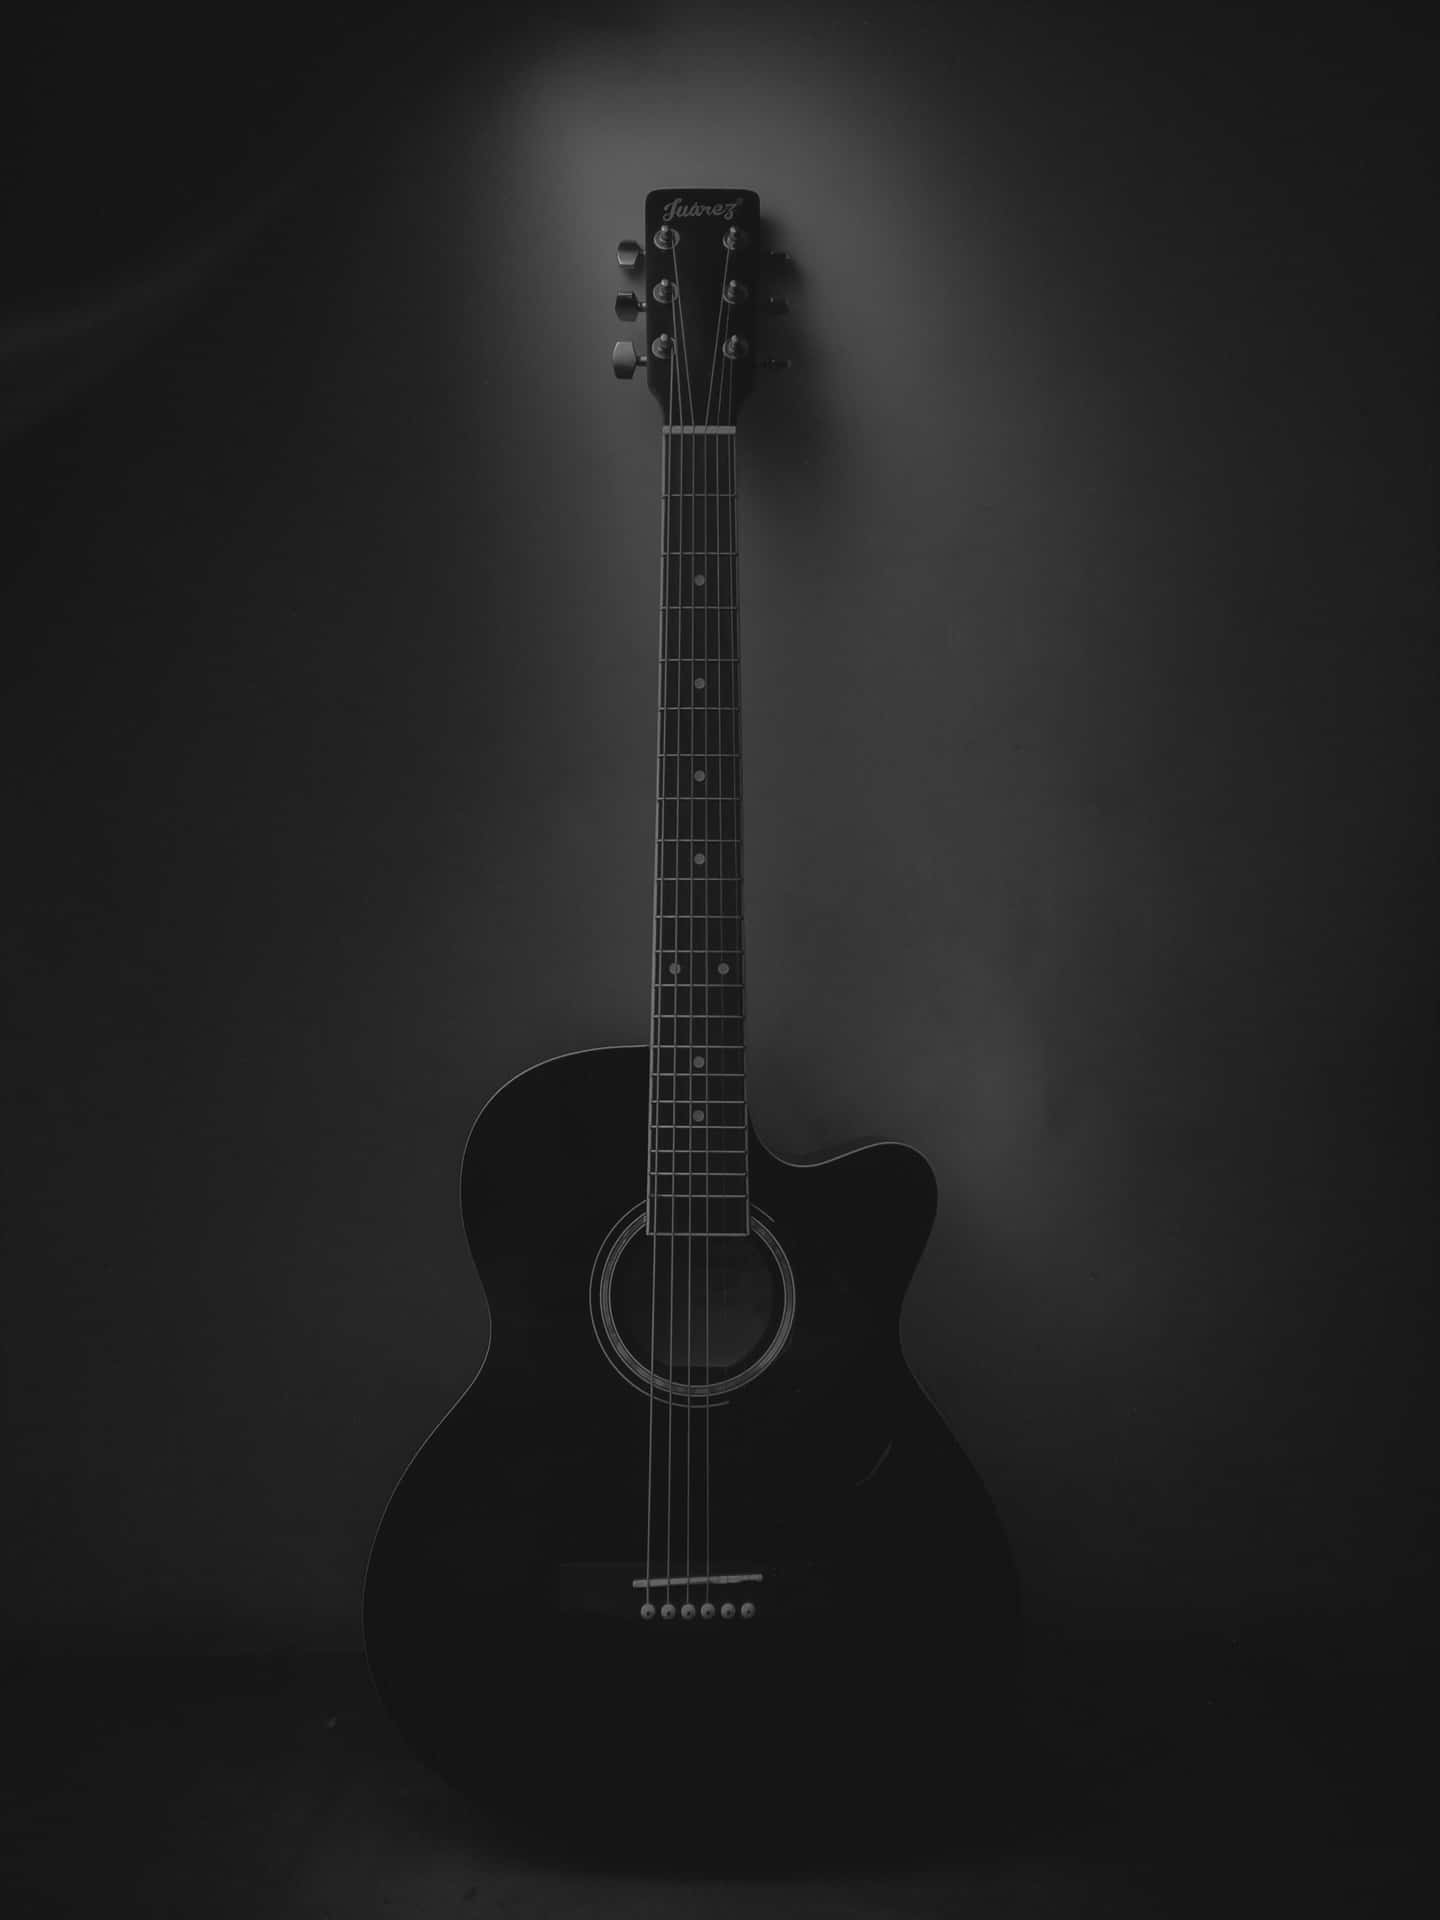 Sad Acoustic Guitar Musical Instrument Wallpaper